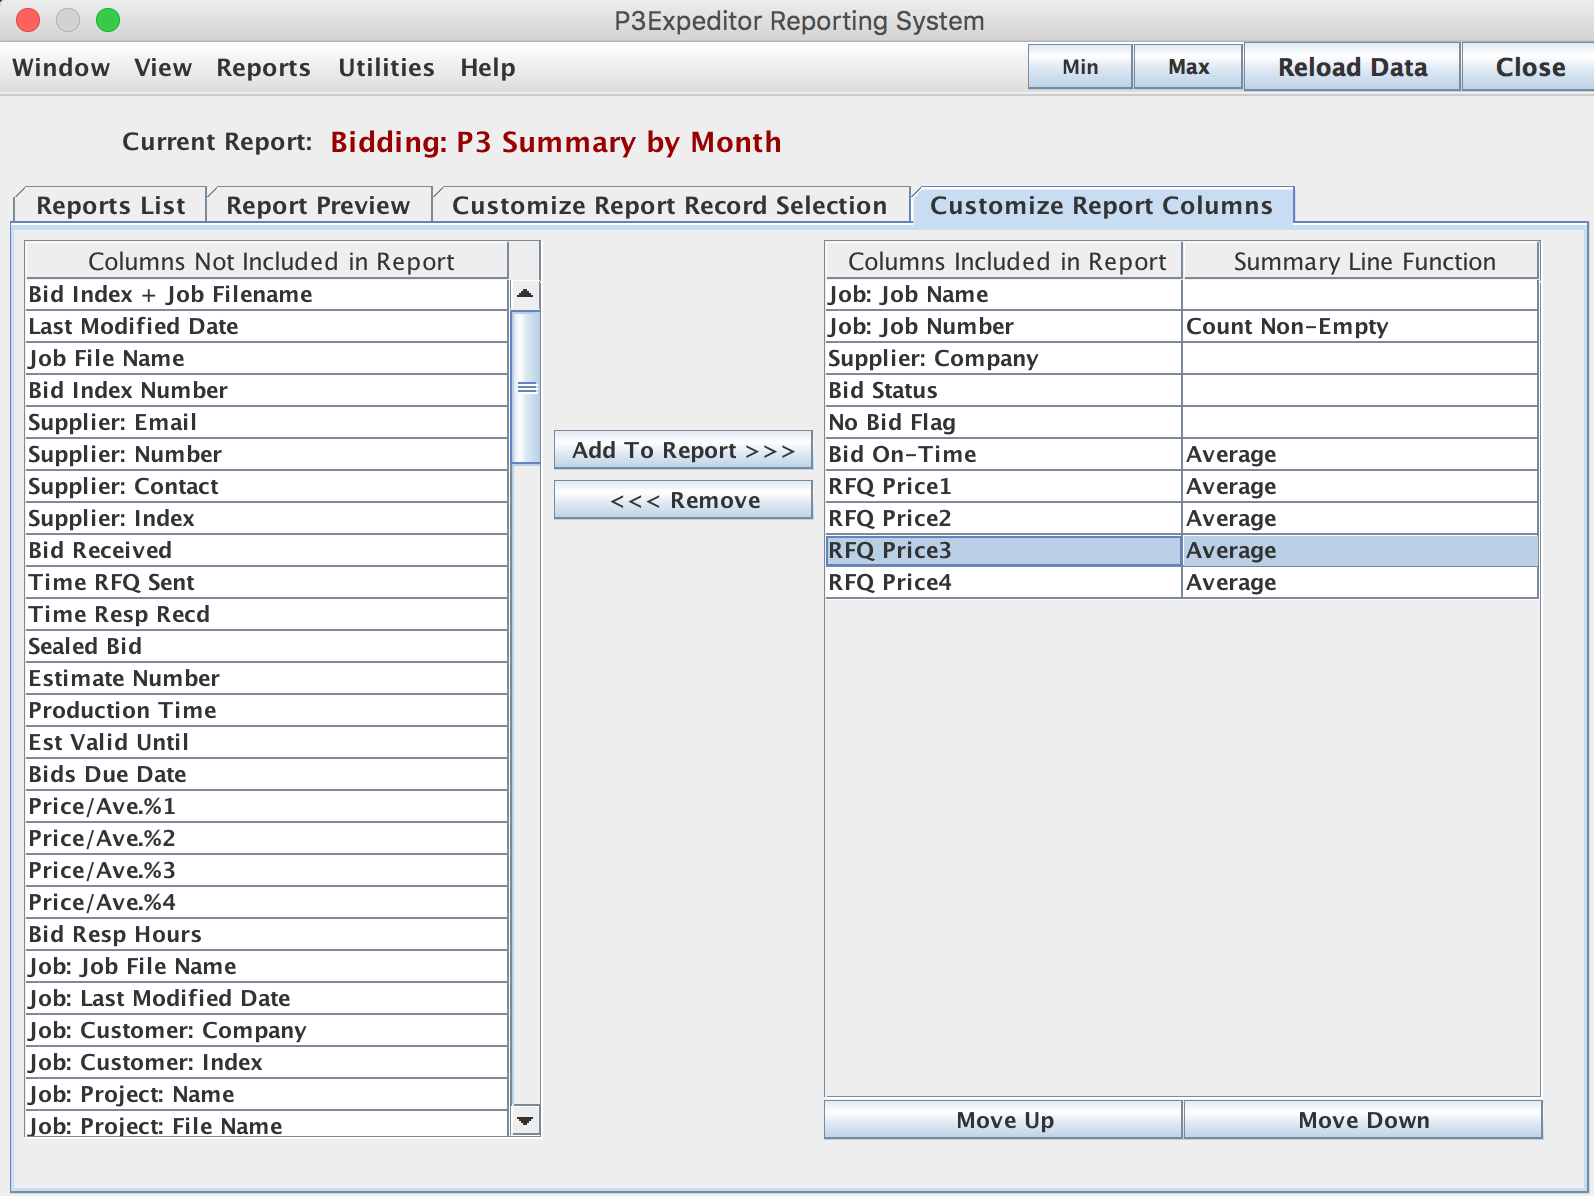 Customize Report Column tab